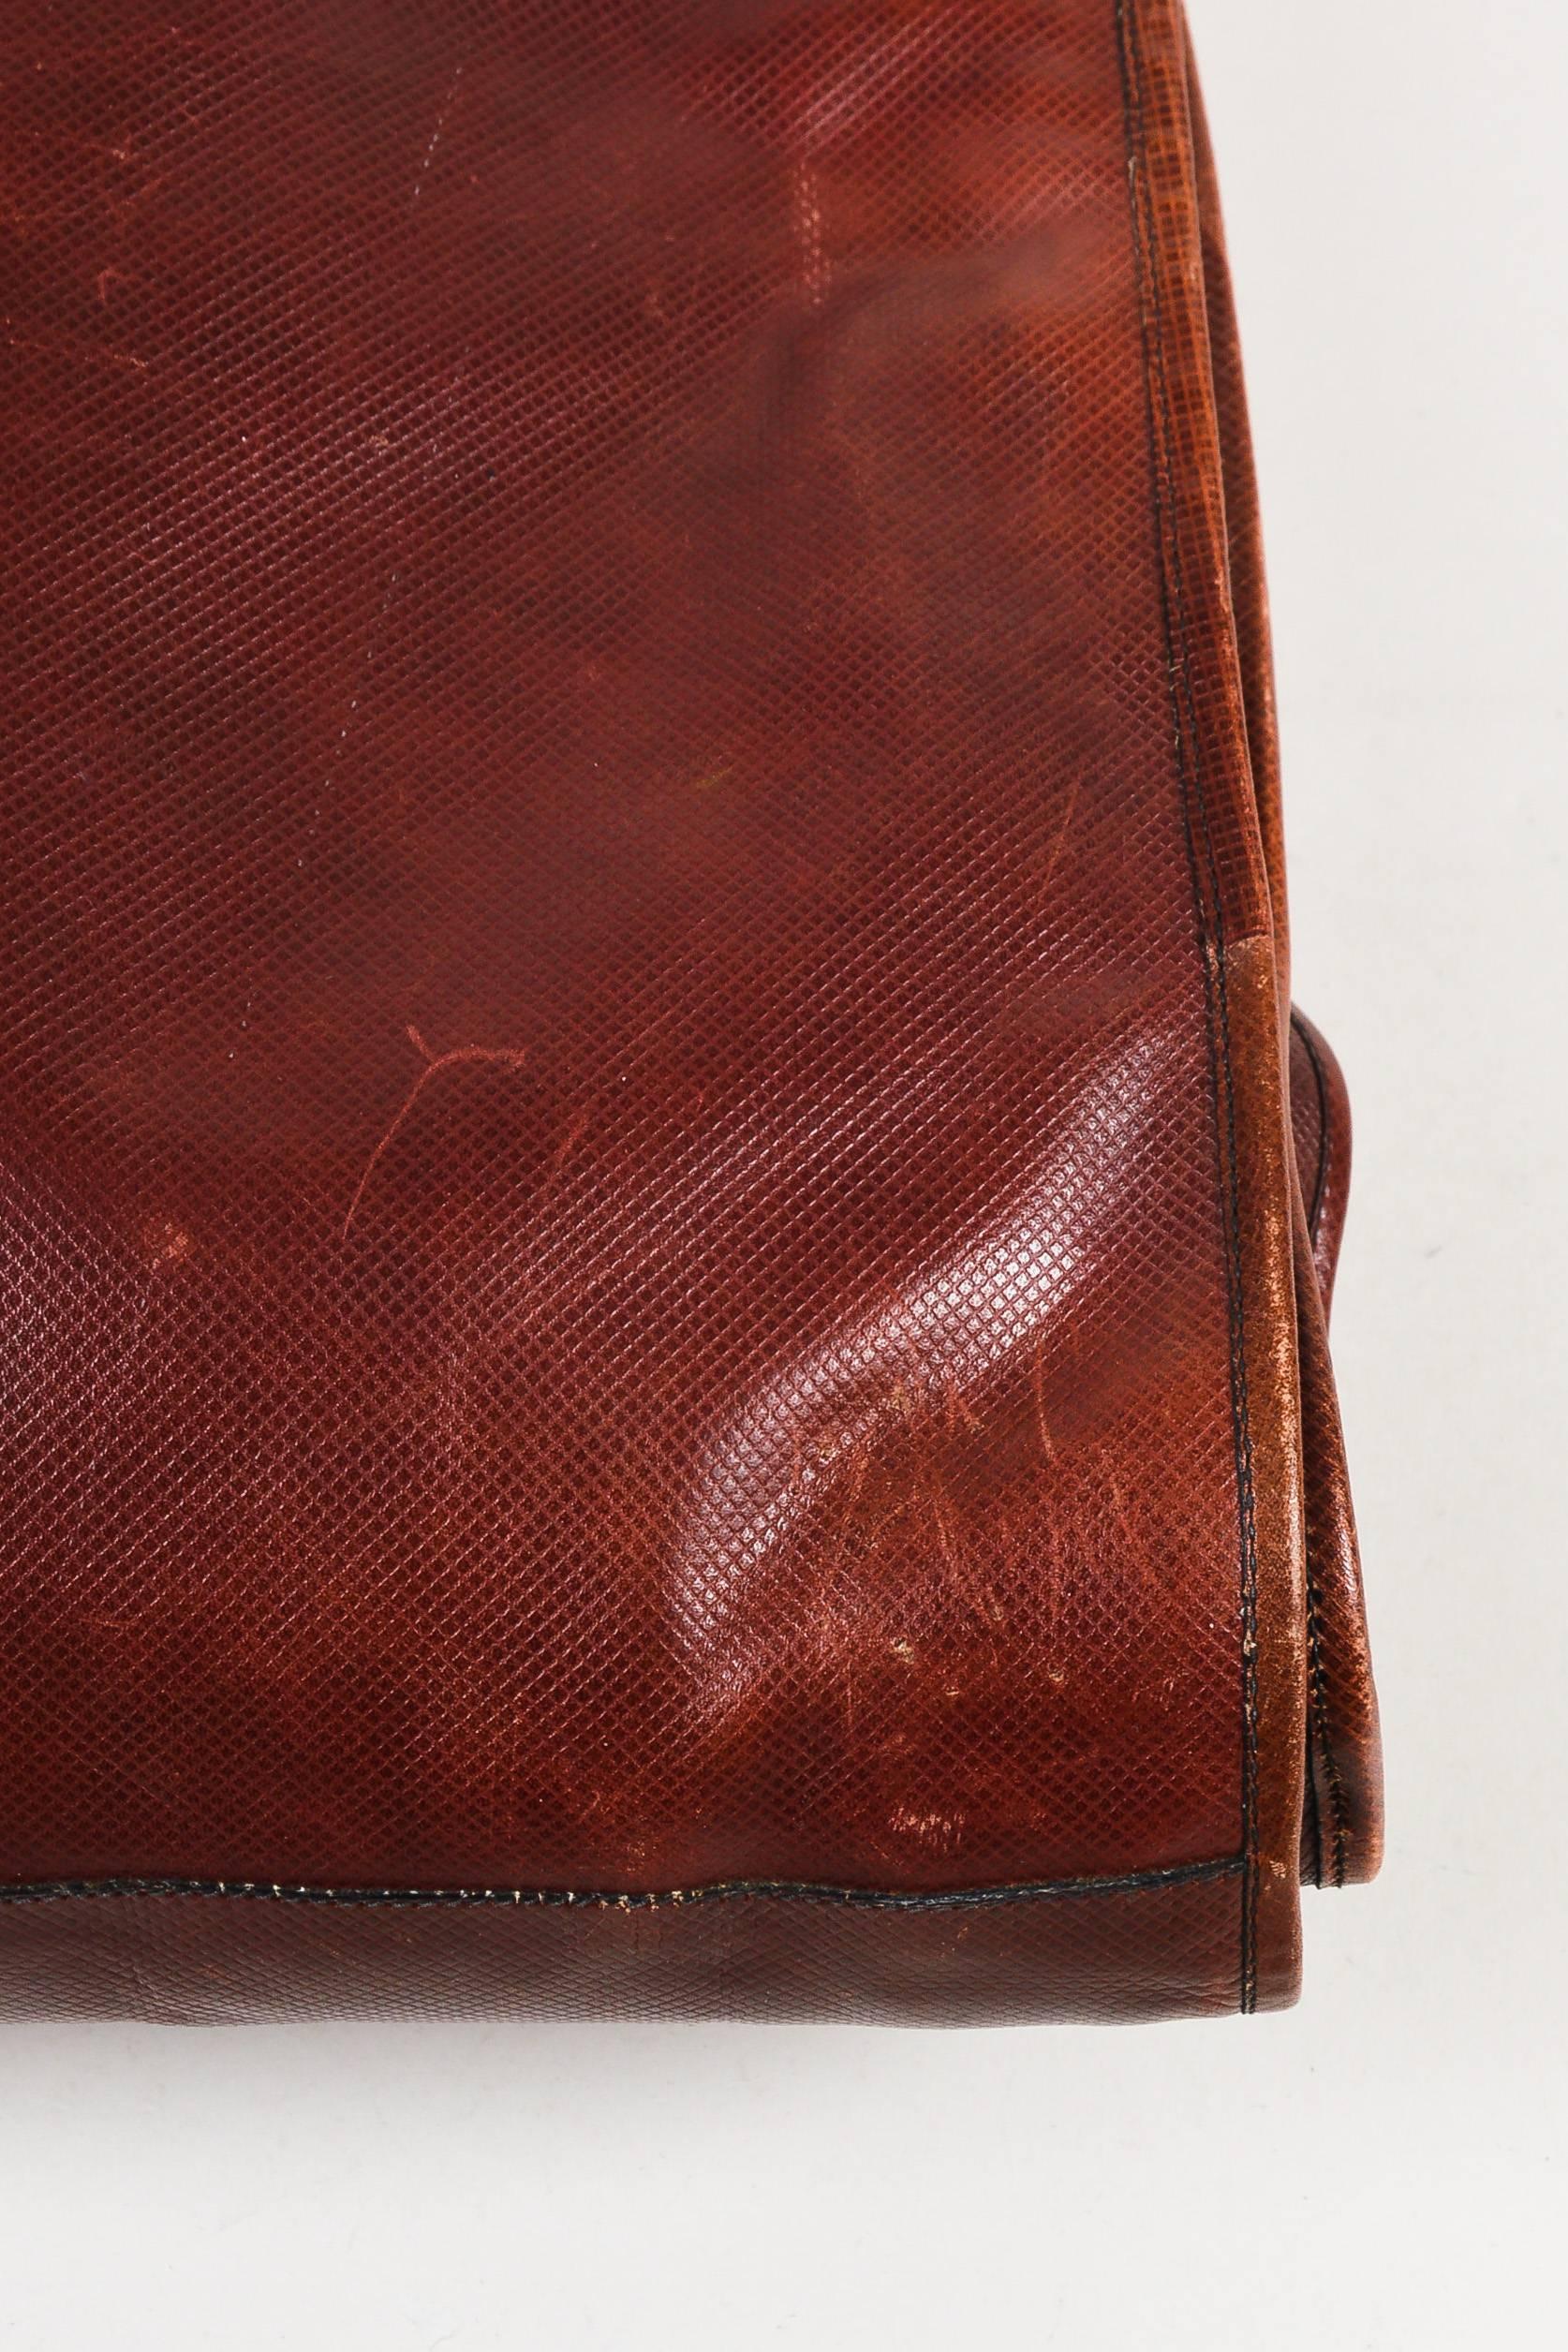 Vintage Bottega Veneta Reddish Brown Textured Leather GHW Folding Garment Bag For Sale 1